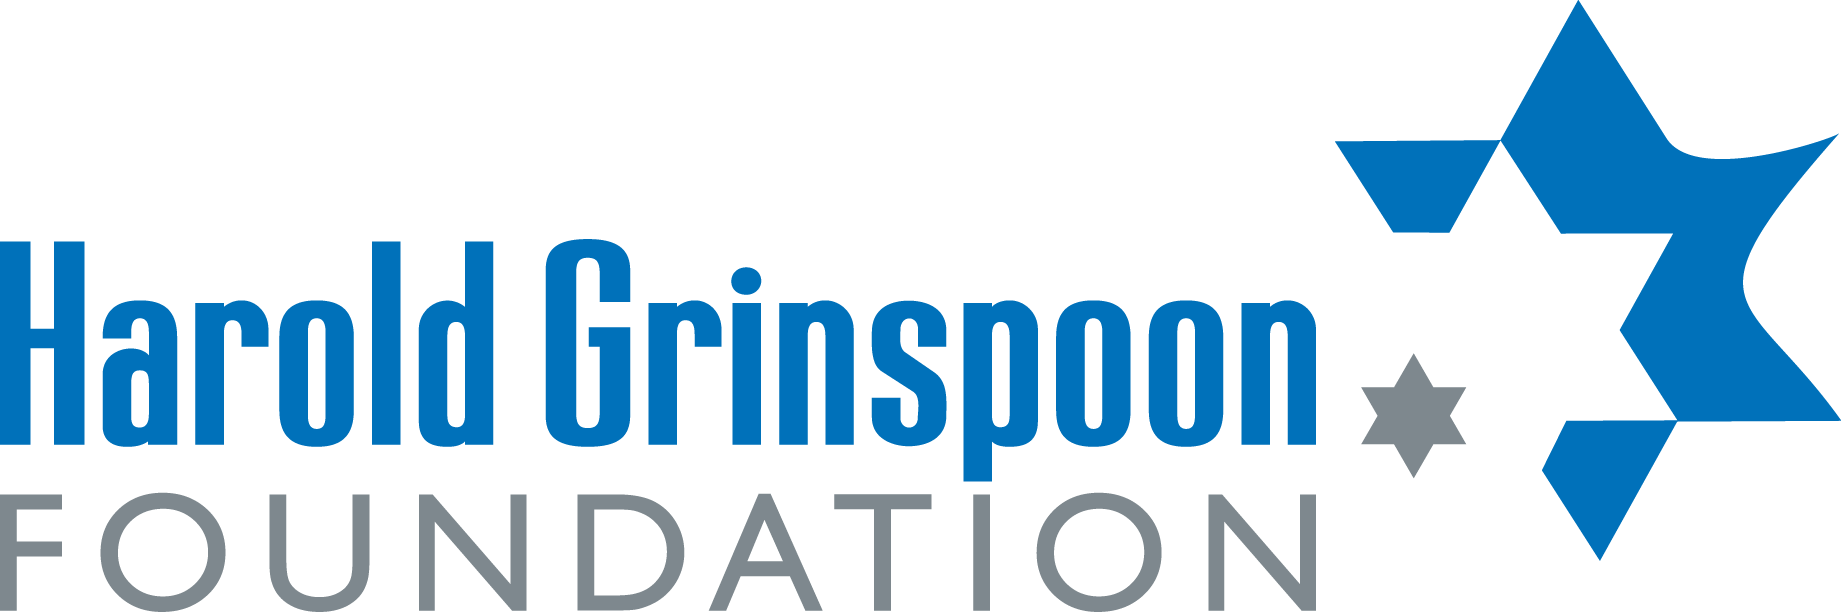 Harold Grinspoon Foundation logo